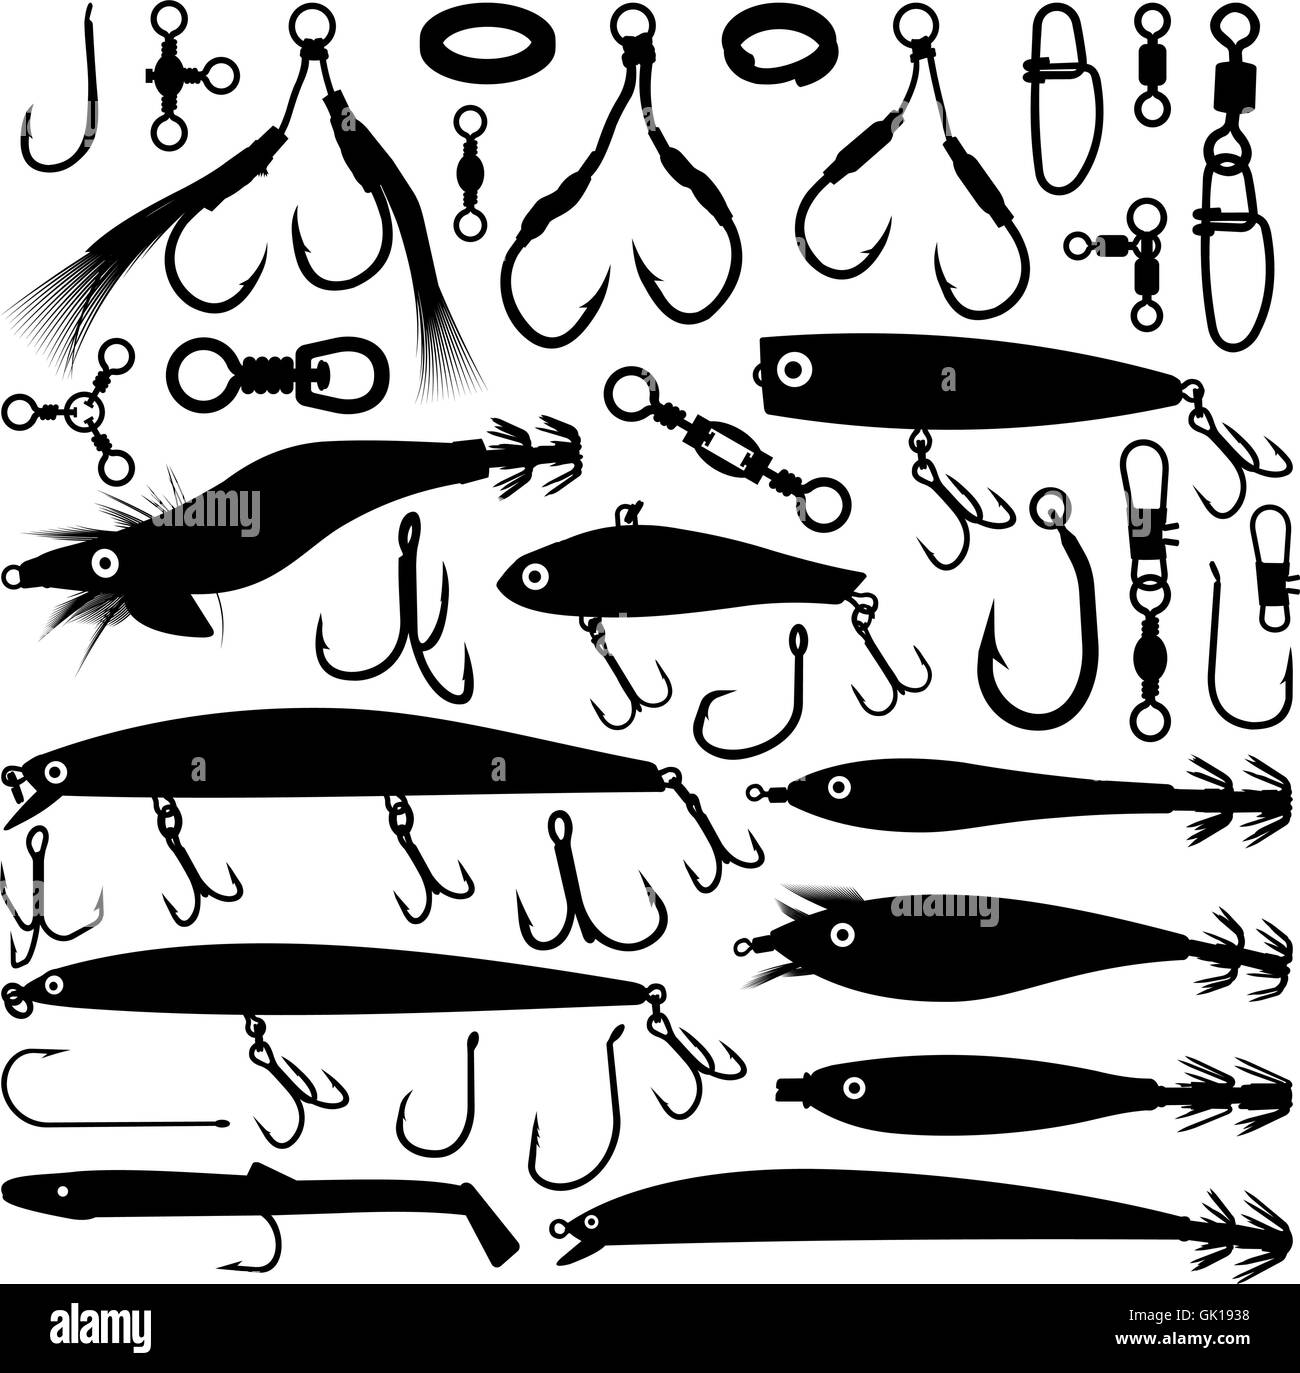 Fishing illustration lures Black and White Stock Photos & Images - Alamy